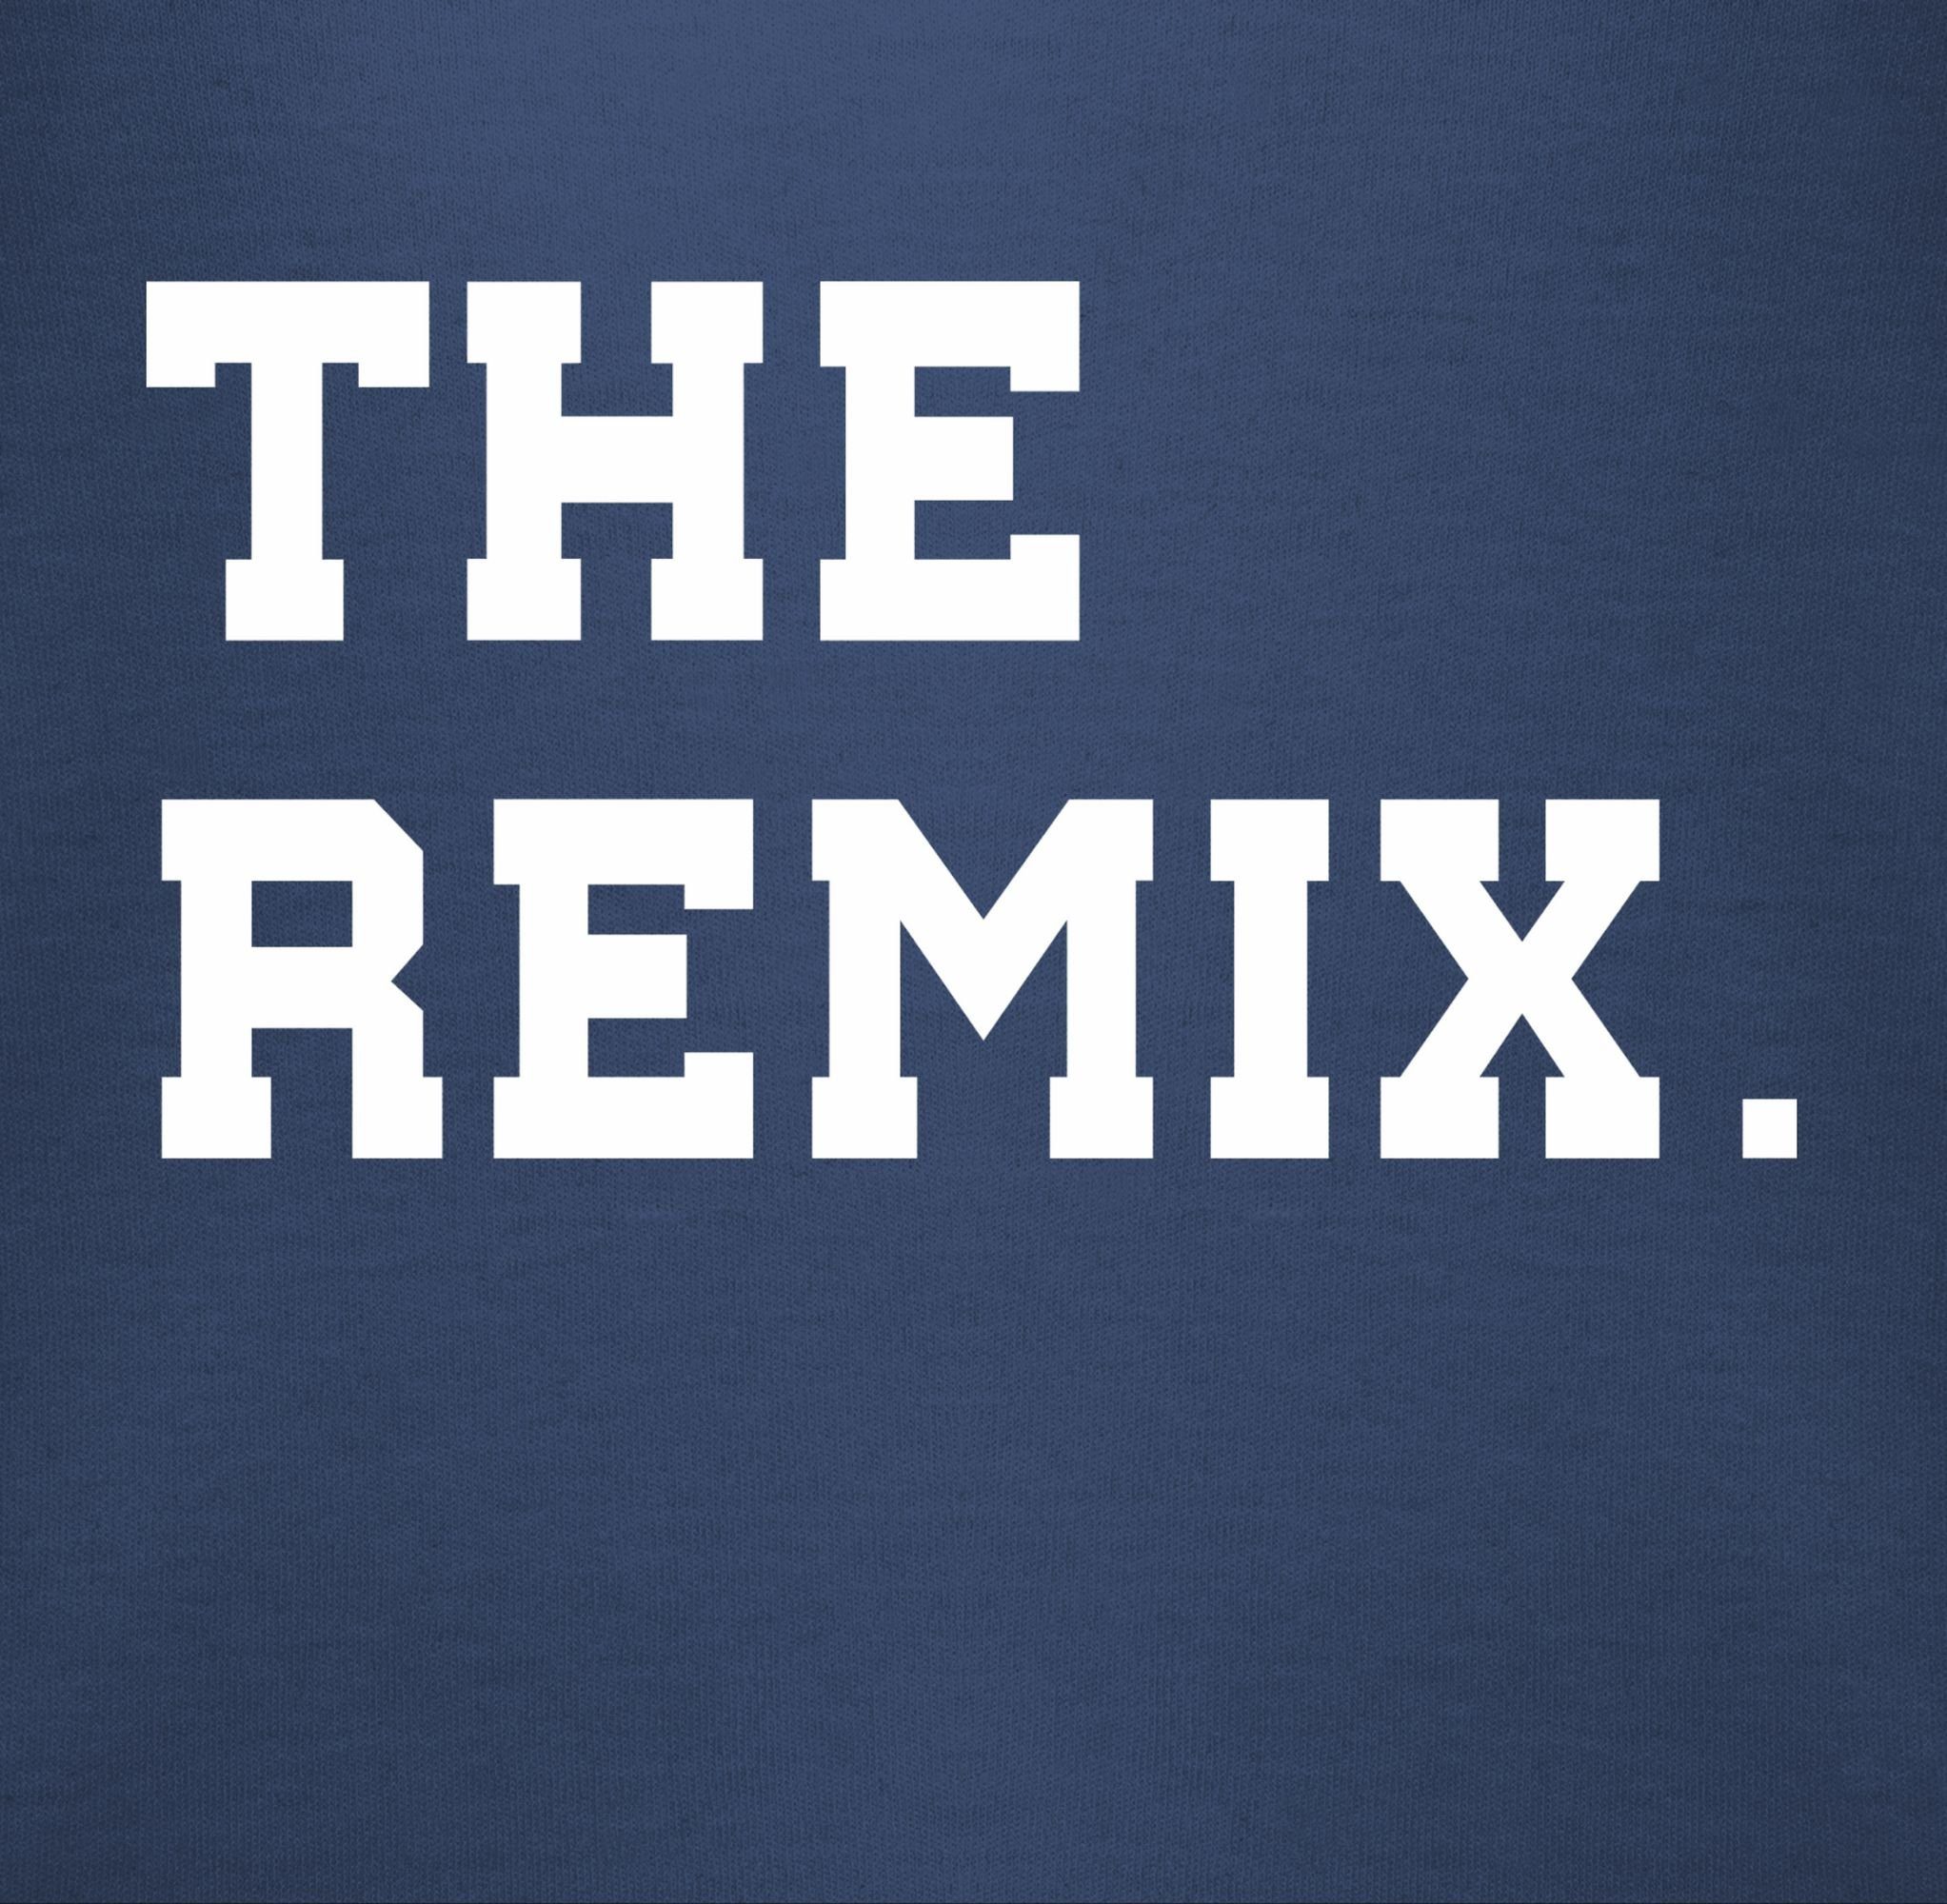 Familie 2 Blau Shirtbody The Baby Navy The Partner-Look Kind Original Shirtracer Remix